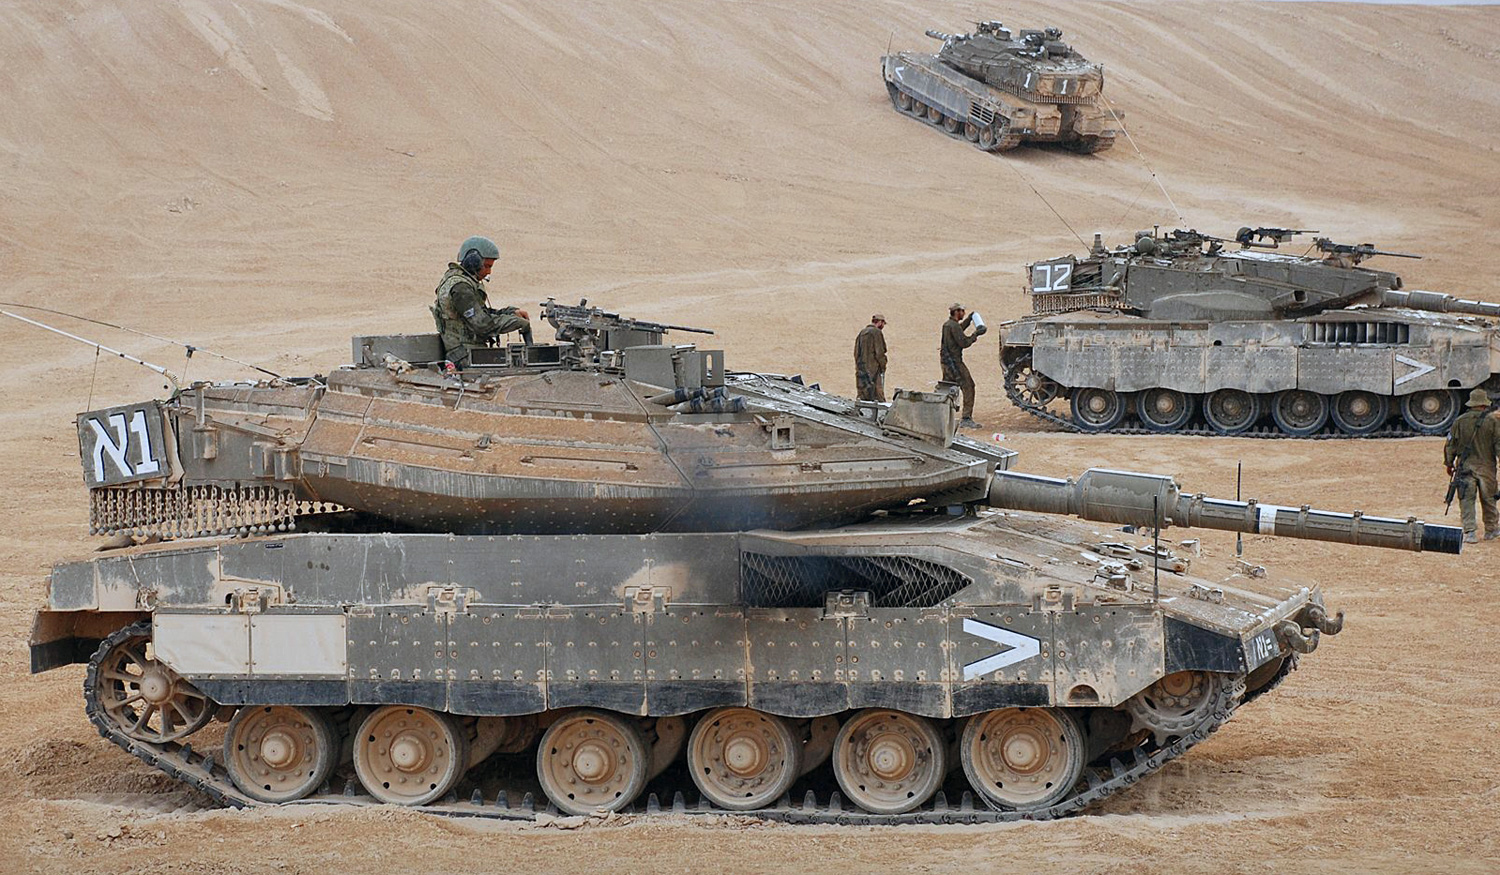 Танк израиля меркава 5: описание, модификации и характеристики